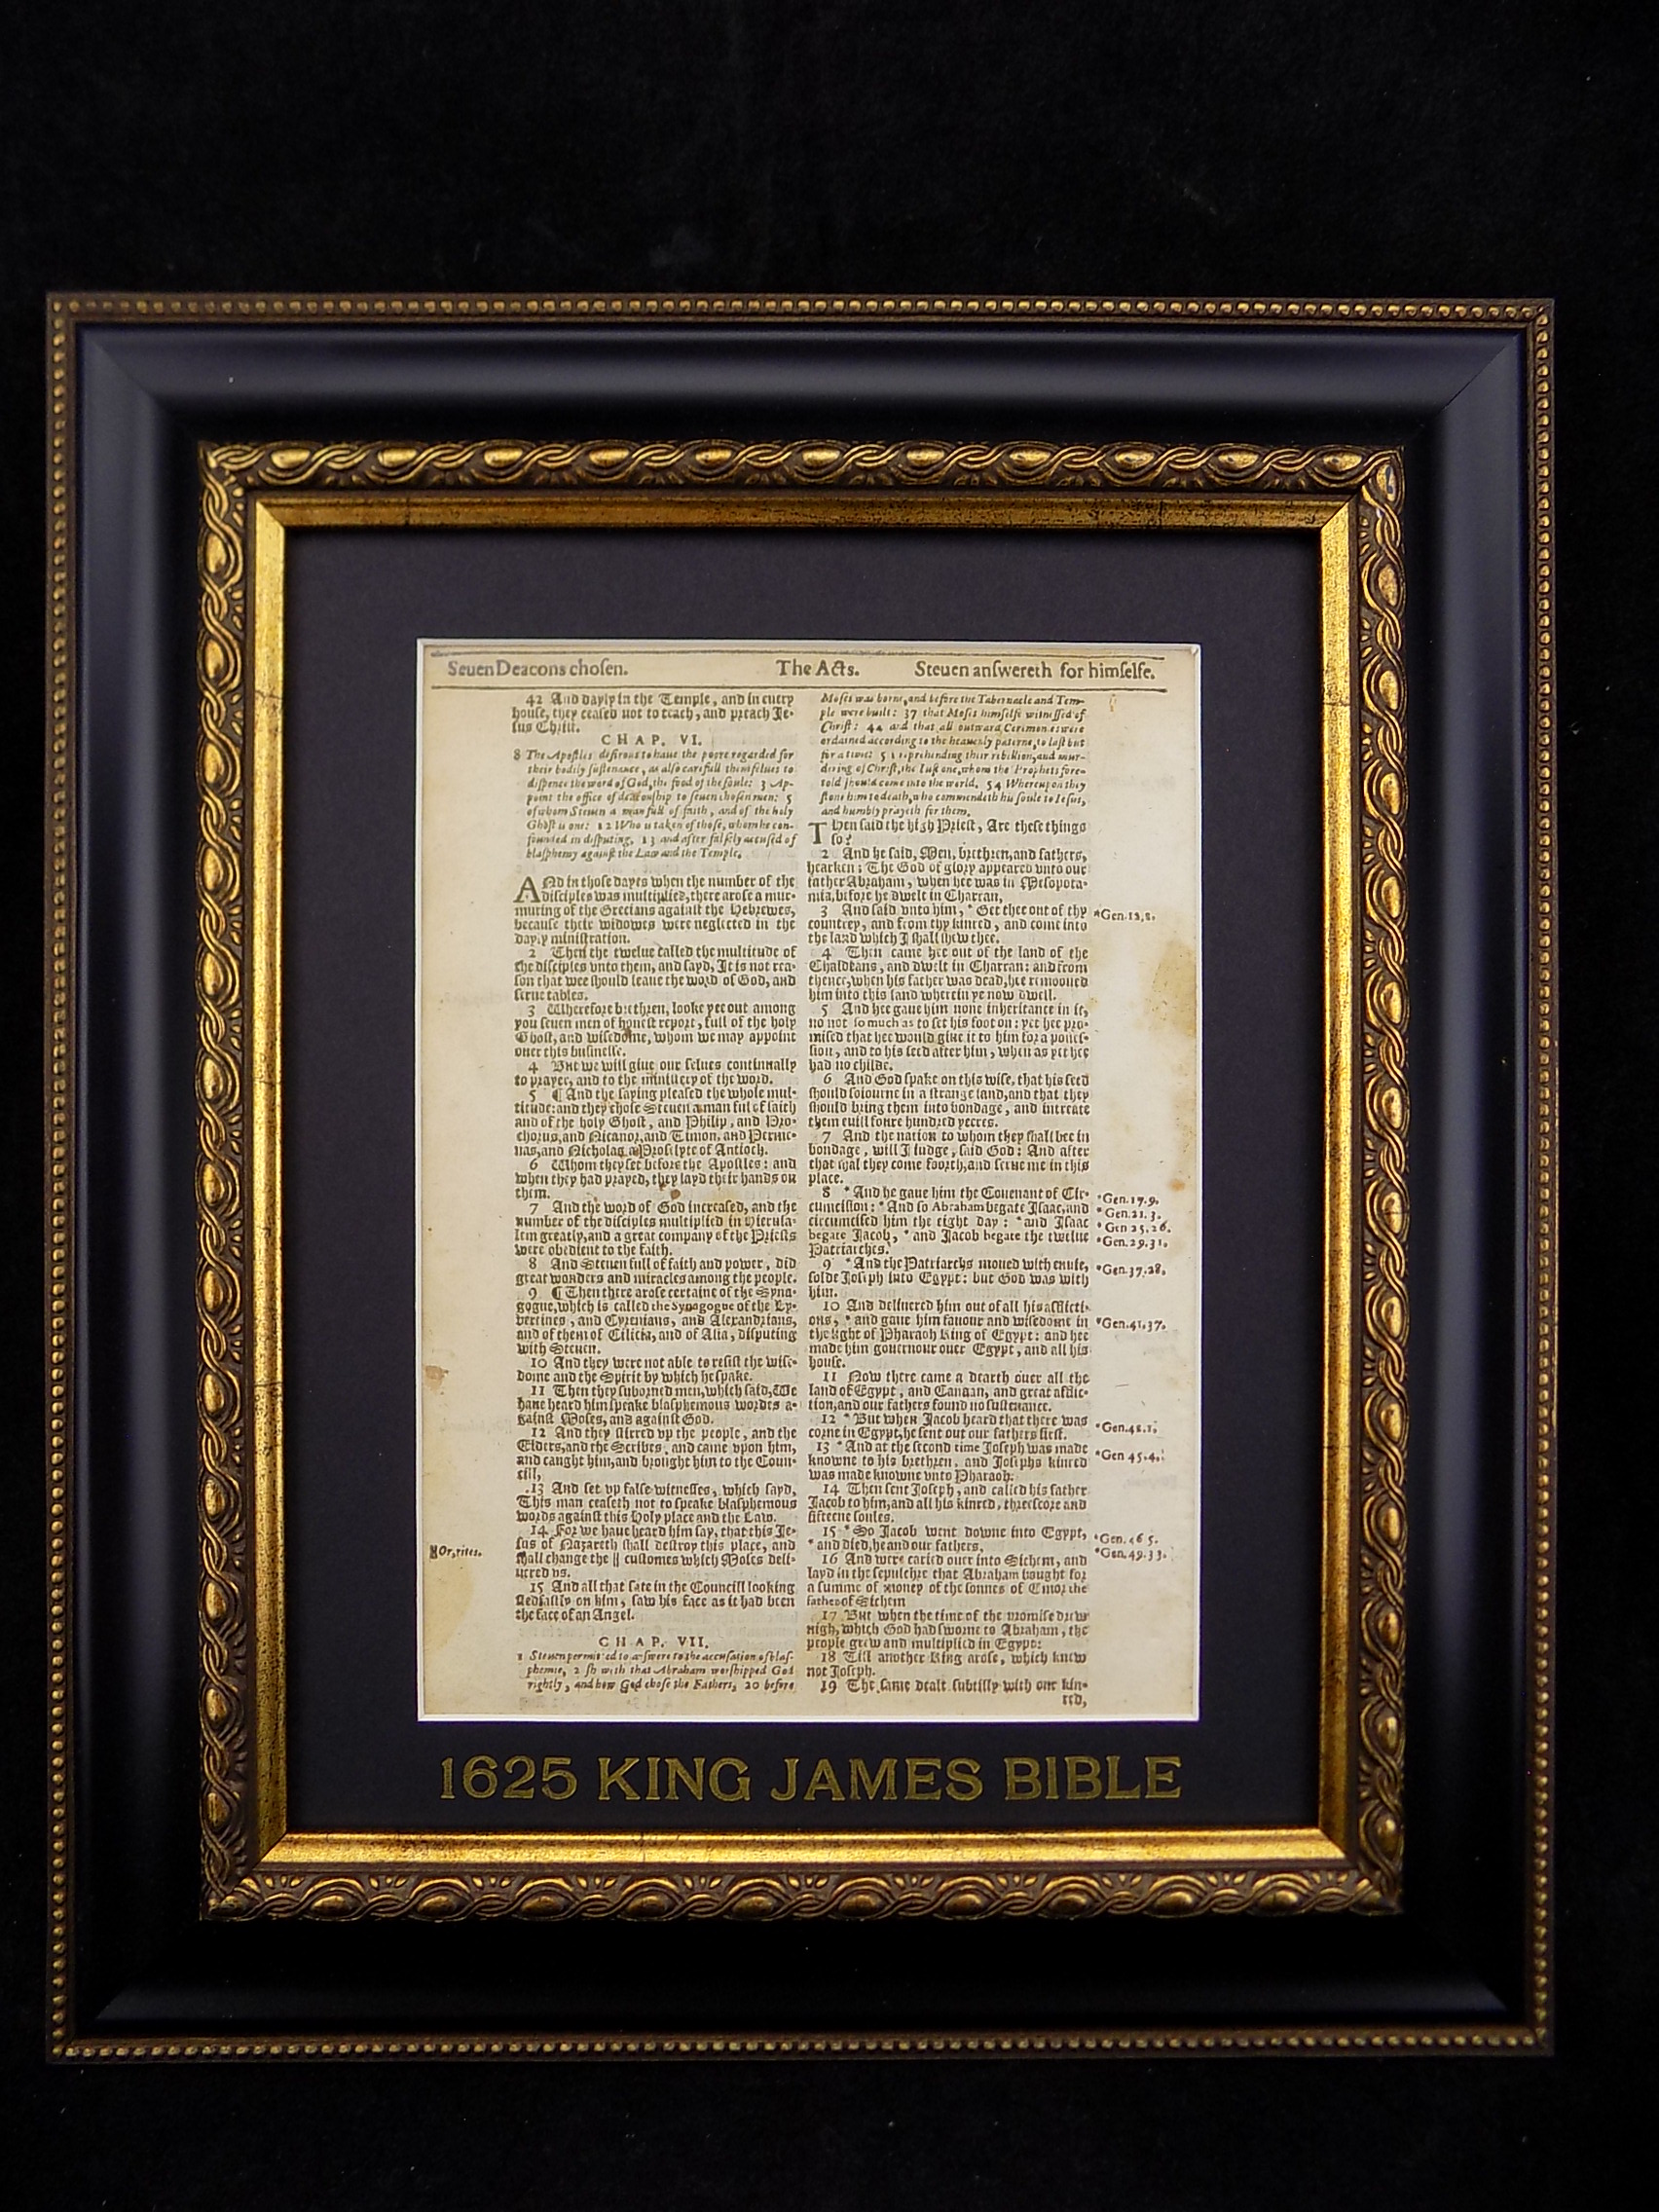 1611 king james bible